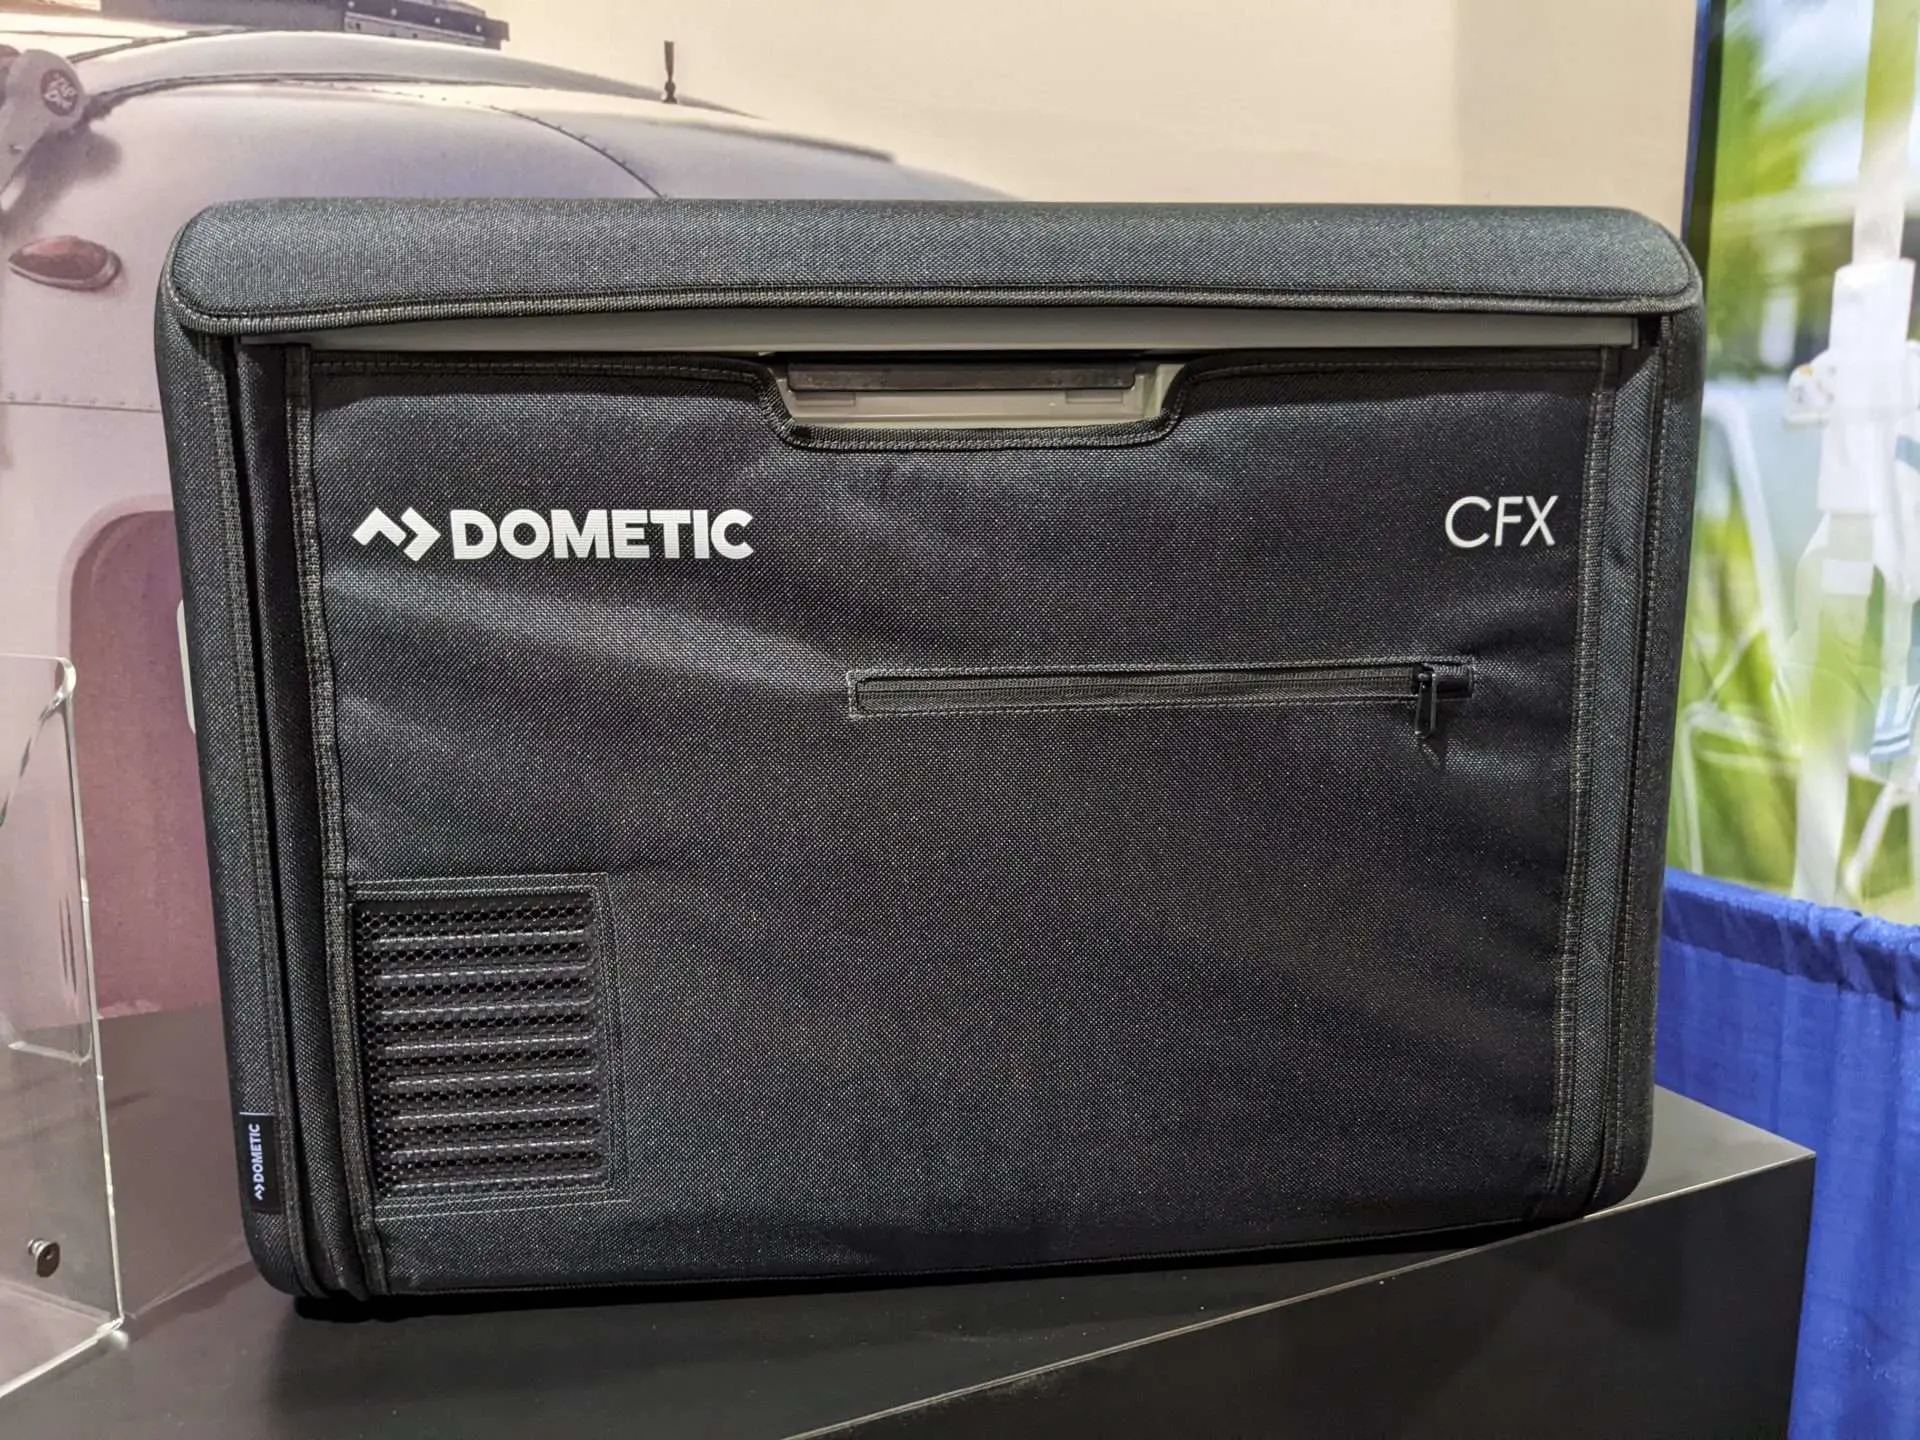 Dometic CFX Cooler